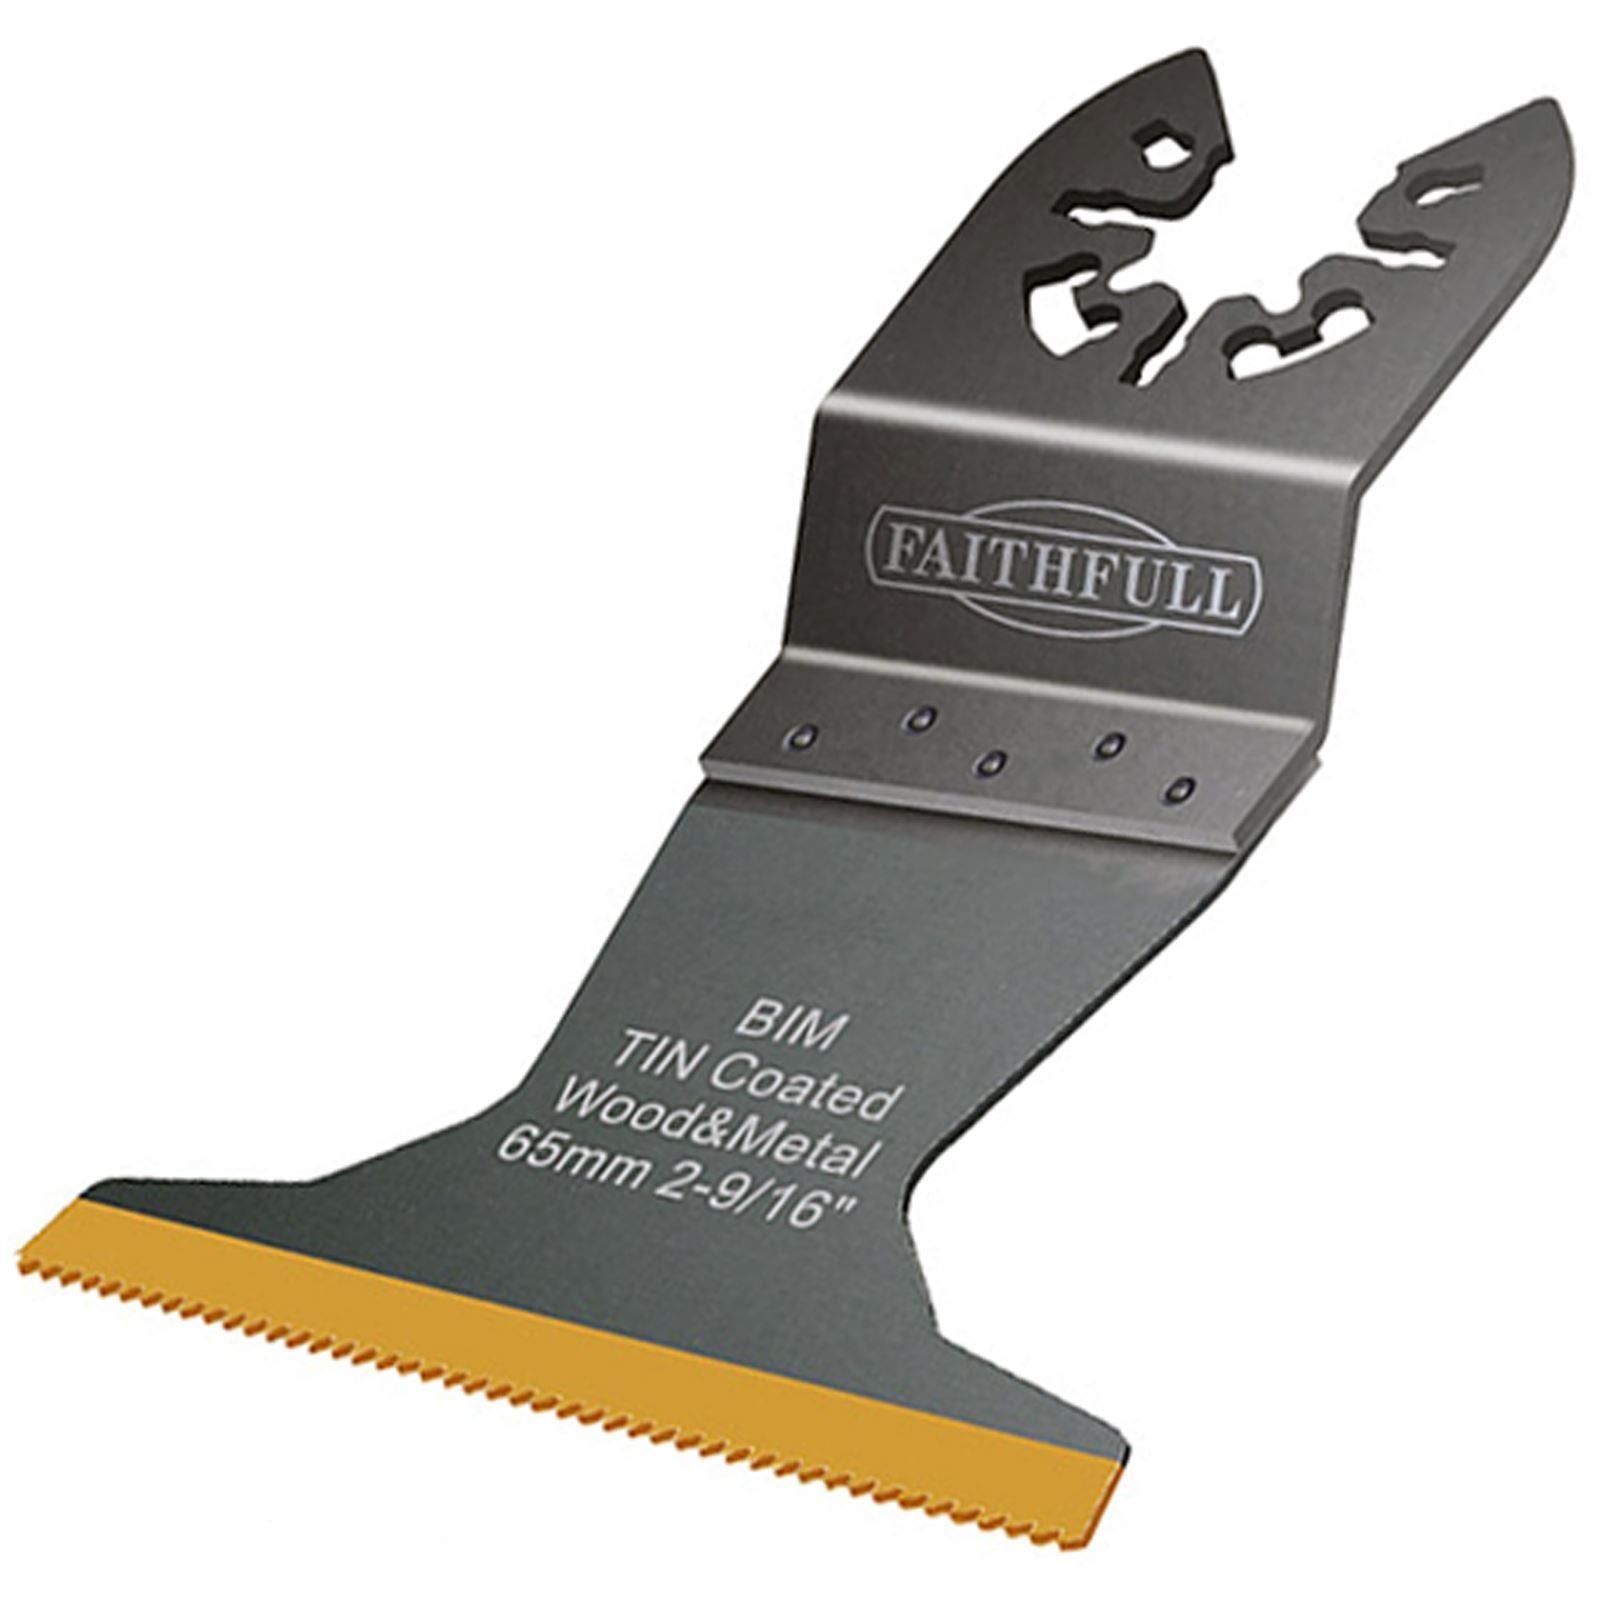 Faithfull 65mm Titanium Coated Flush Cut Multi Function Blade